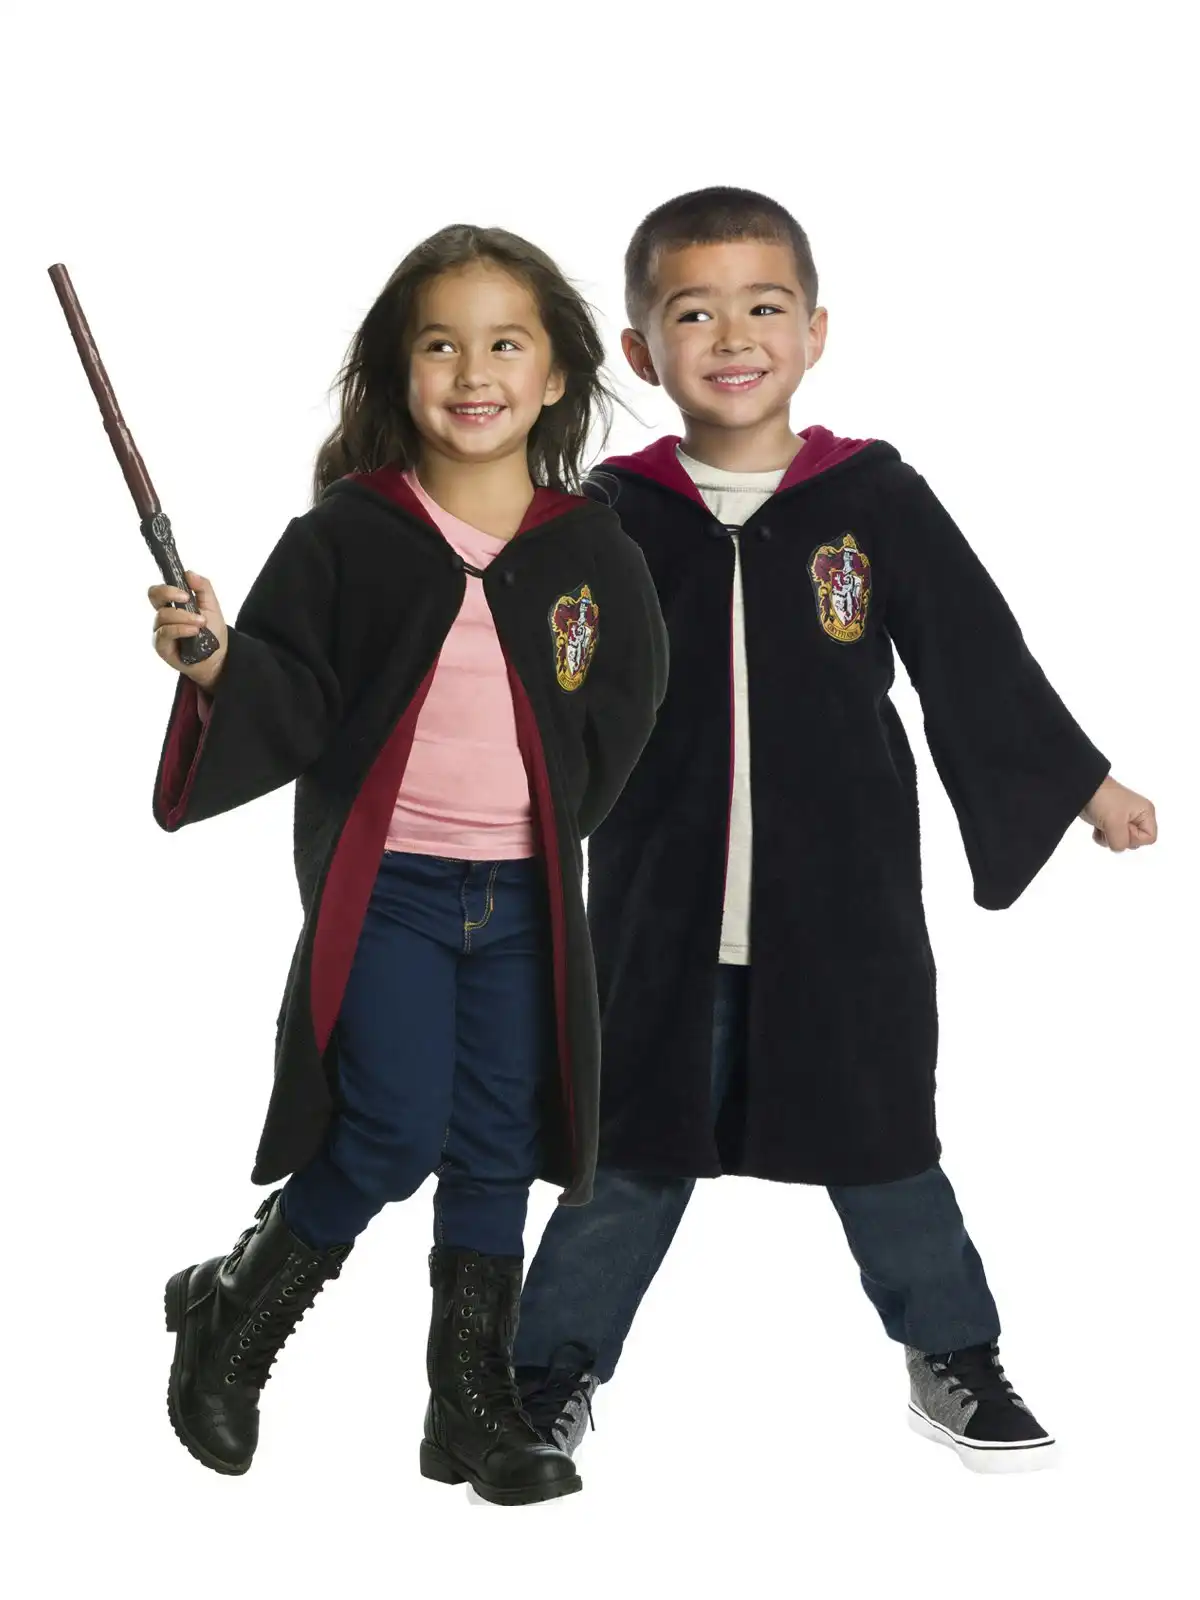 Harry Potter Gryffindor Character Costume/Dress Up Toddler Robe - Size Toddler